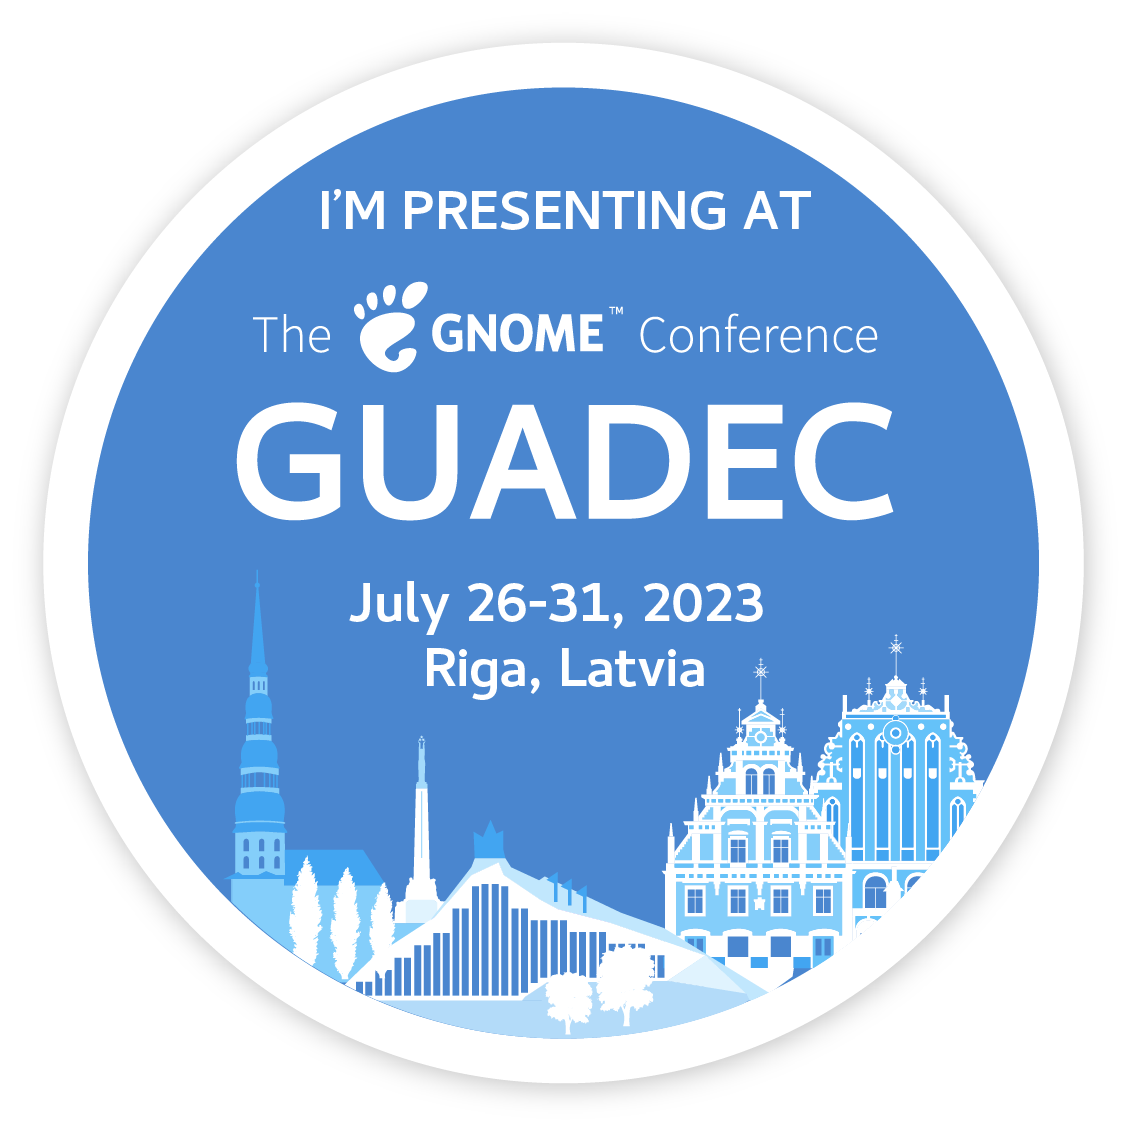 I'm Presenting at GUADEC July 26-31, 2023 in Riga, Latvia